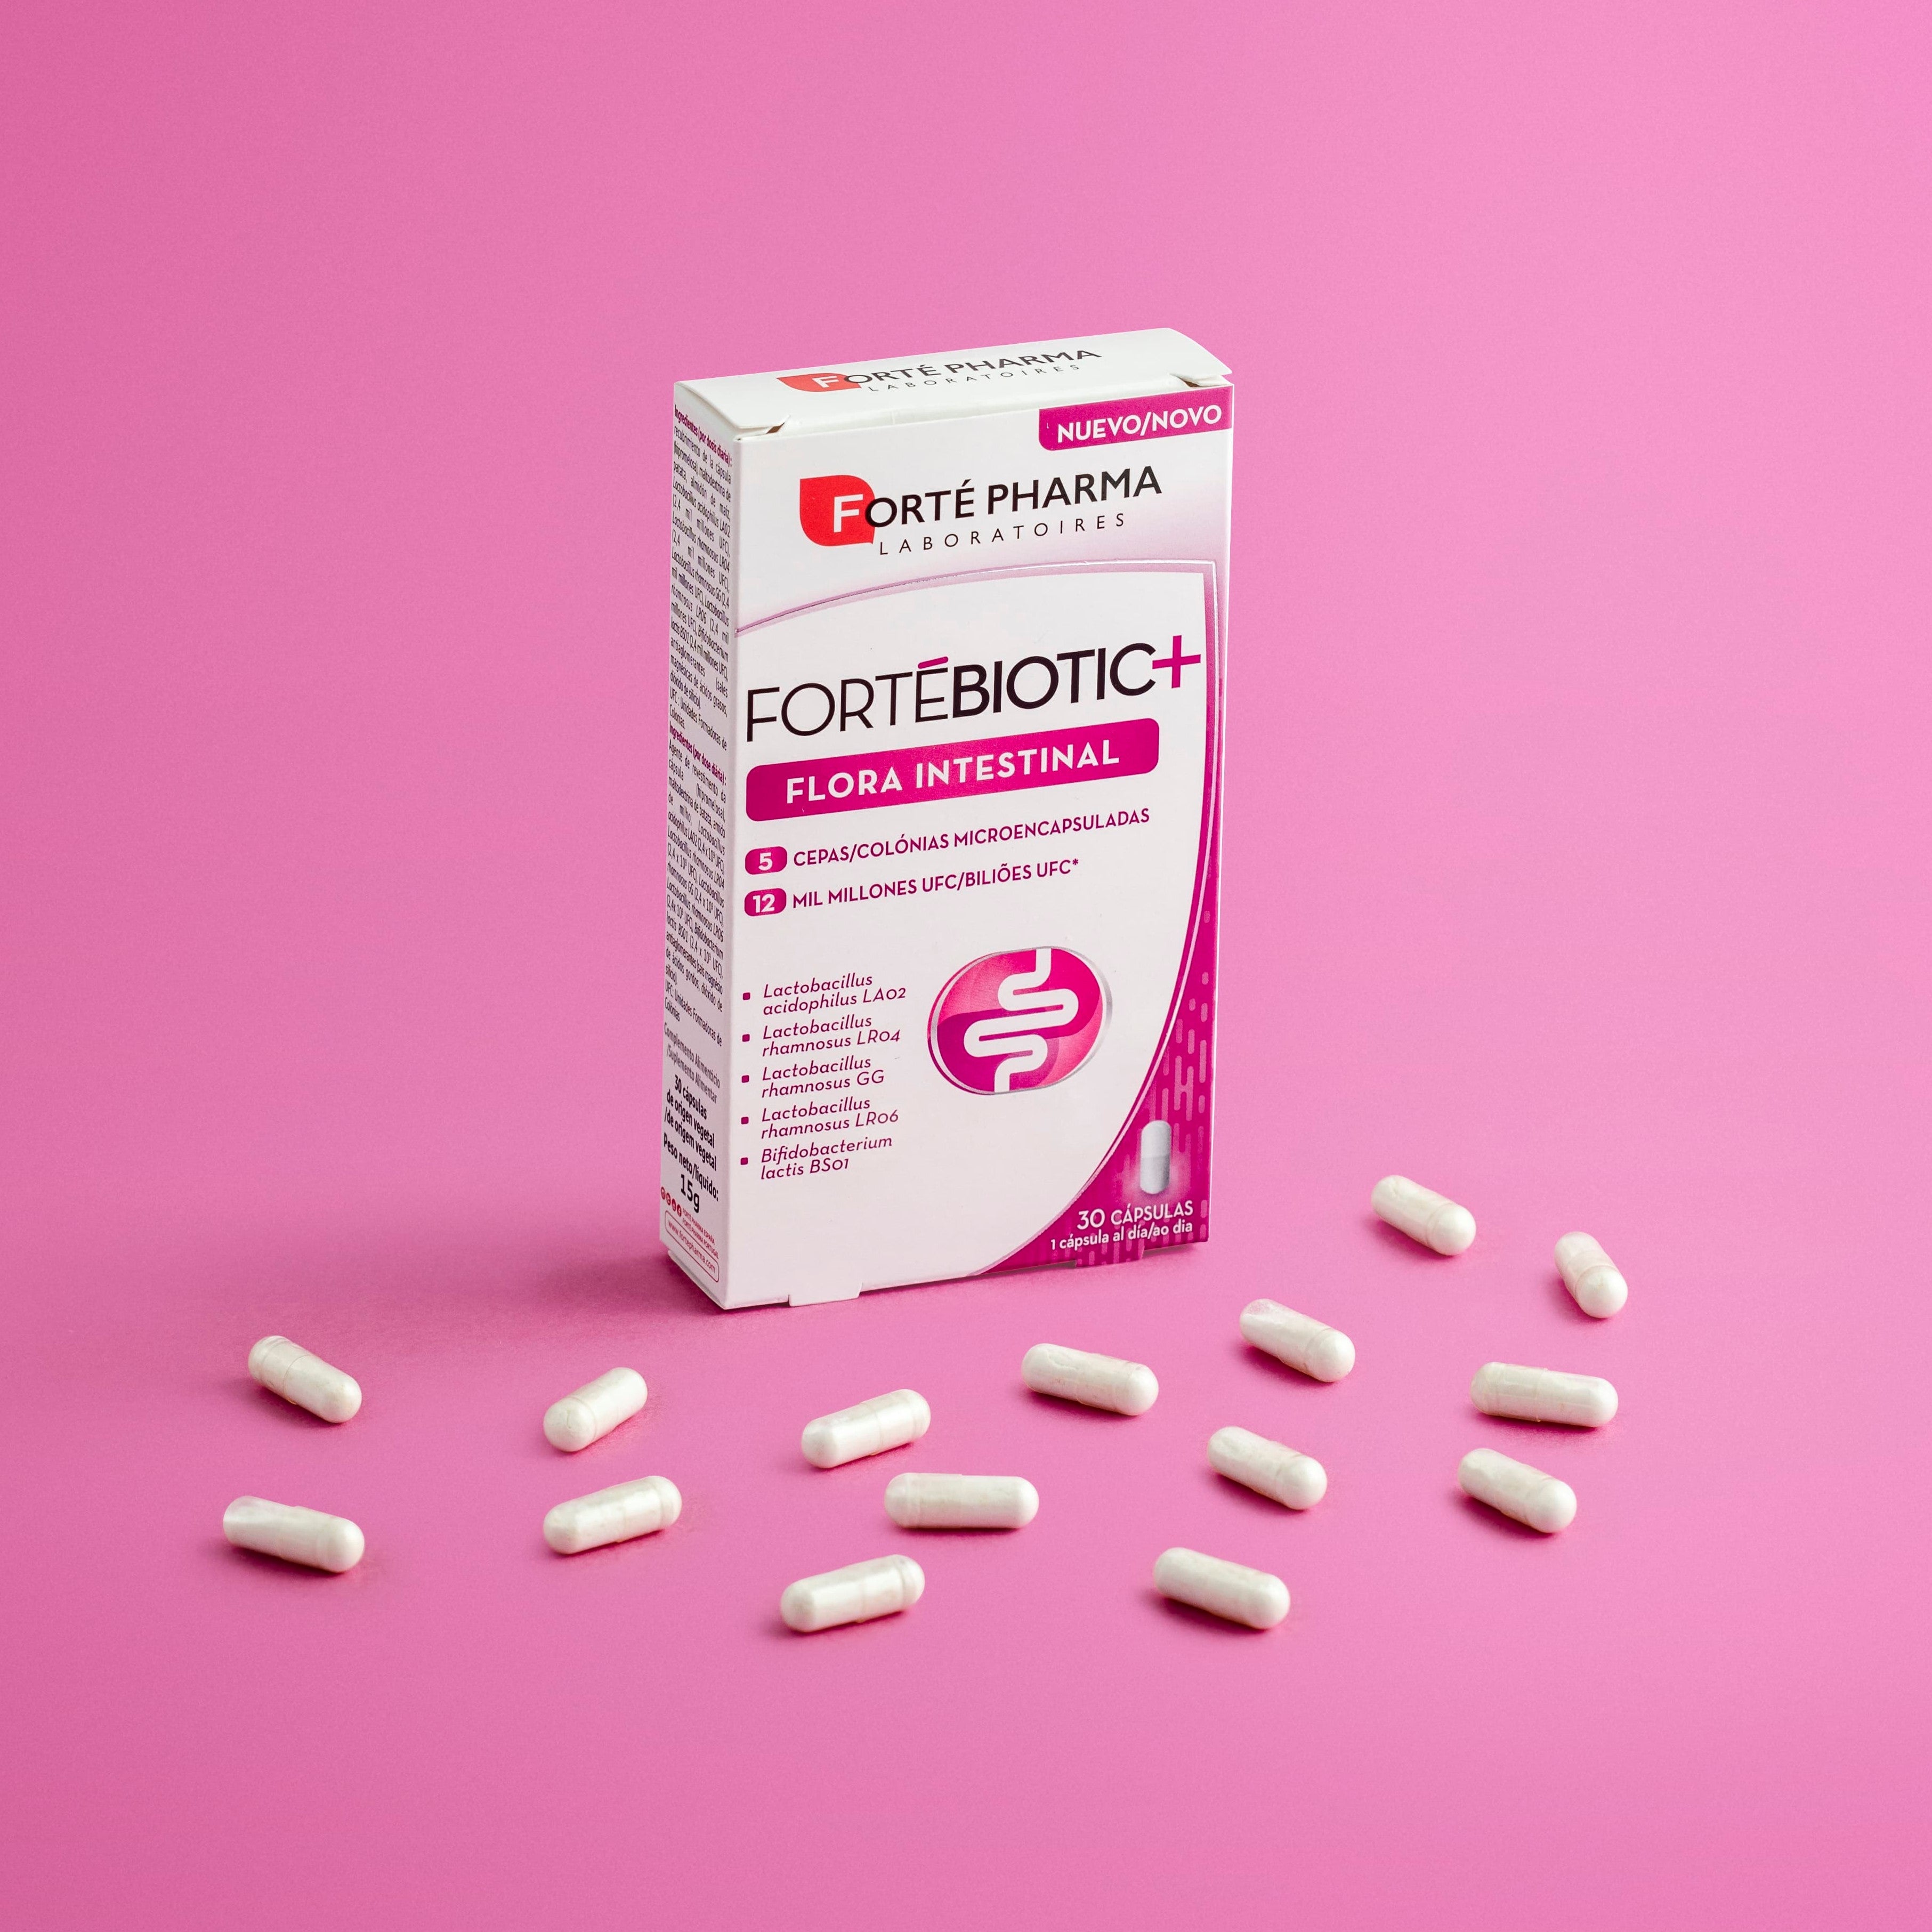 fortébiotic+ flora intestinal-Probióticos-Forté Pharma